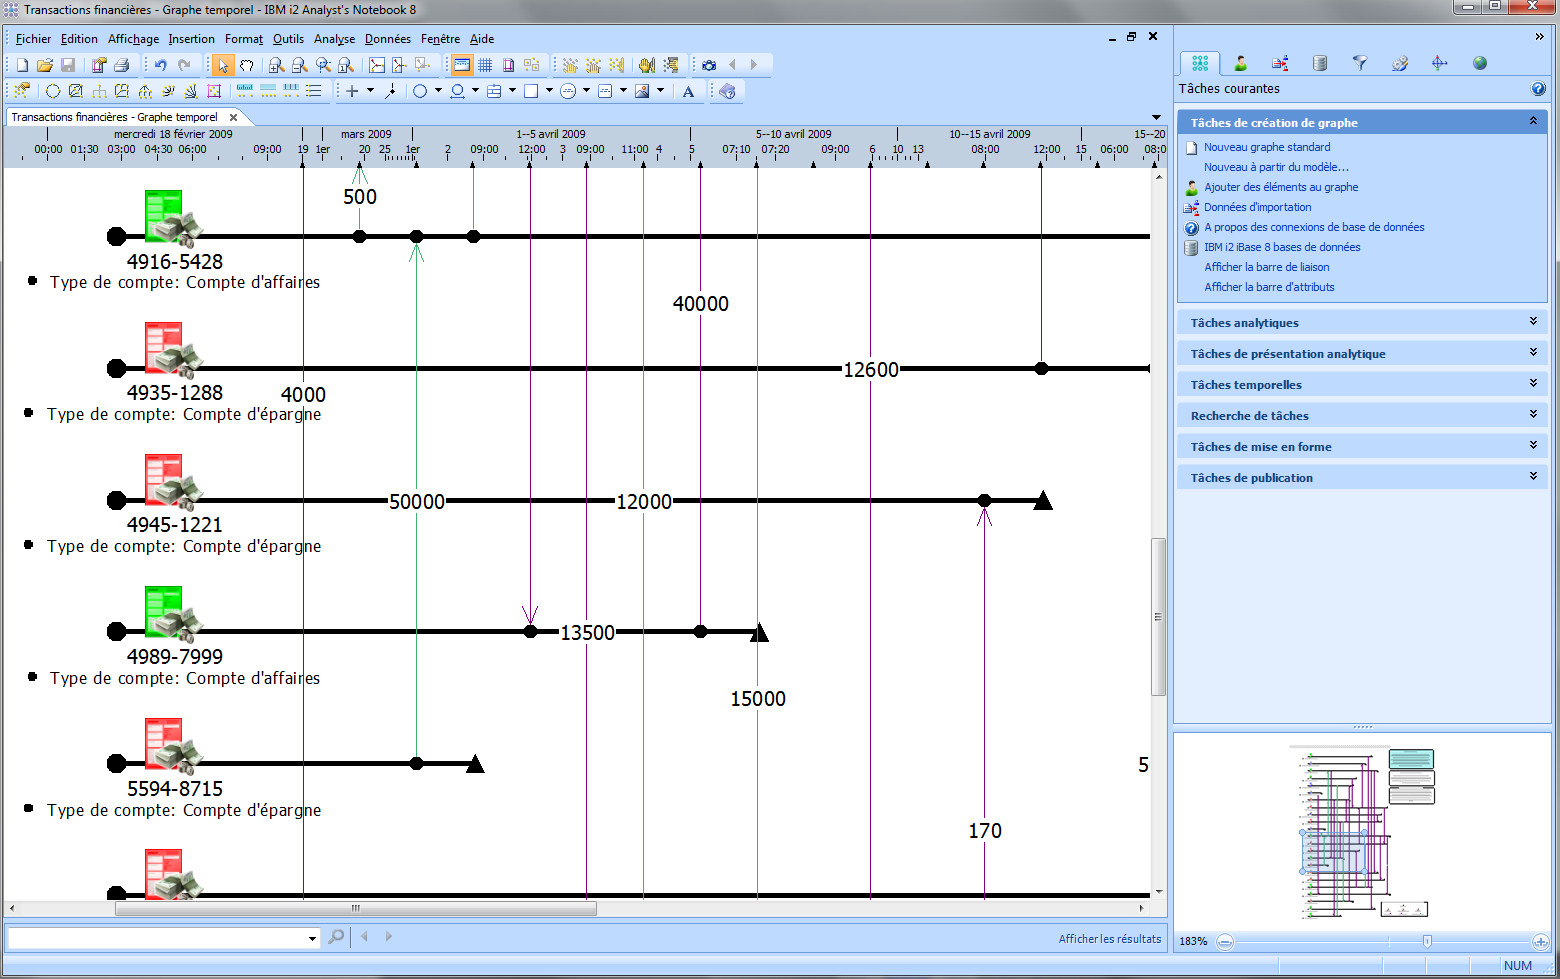 Exemple Analyse temporelle avec IBM i2  Analyst's Notebook